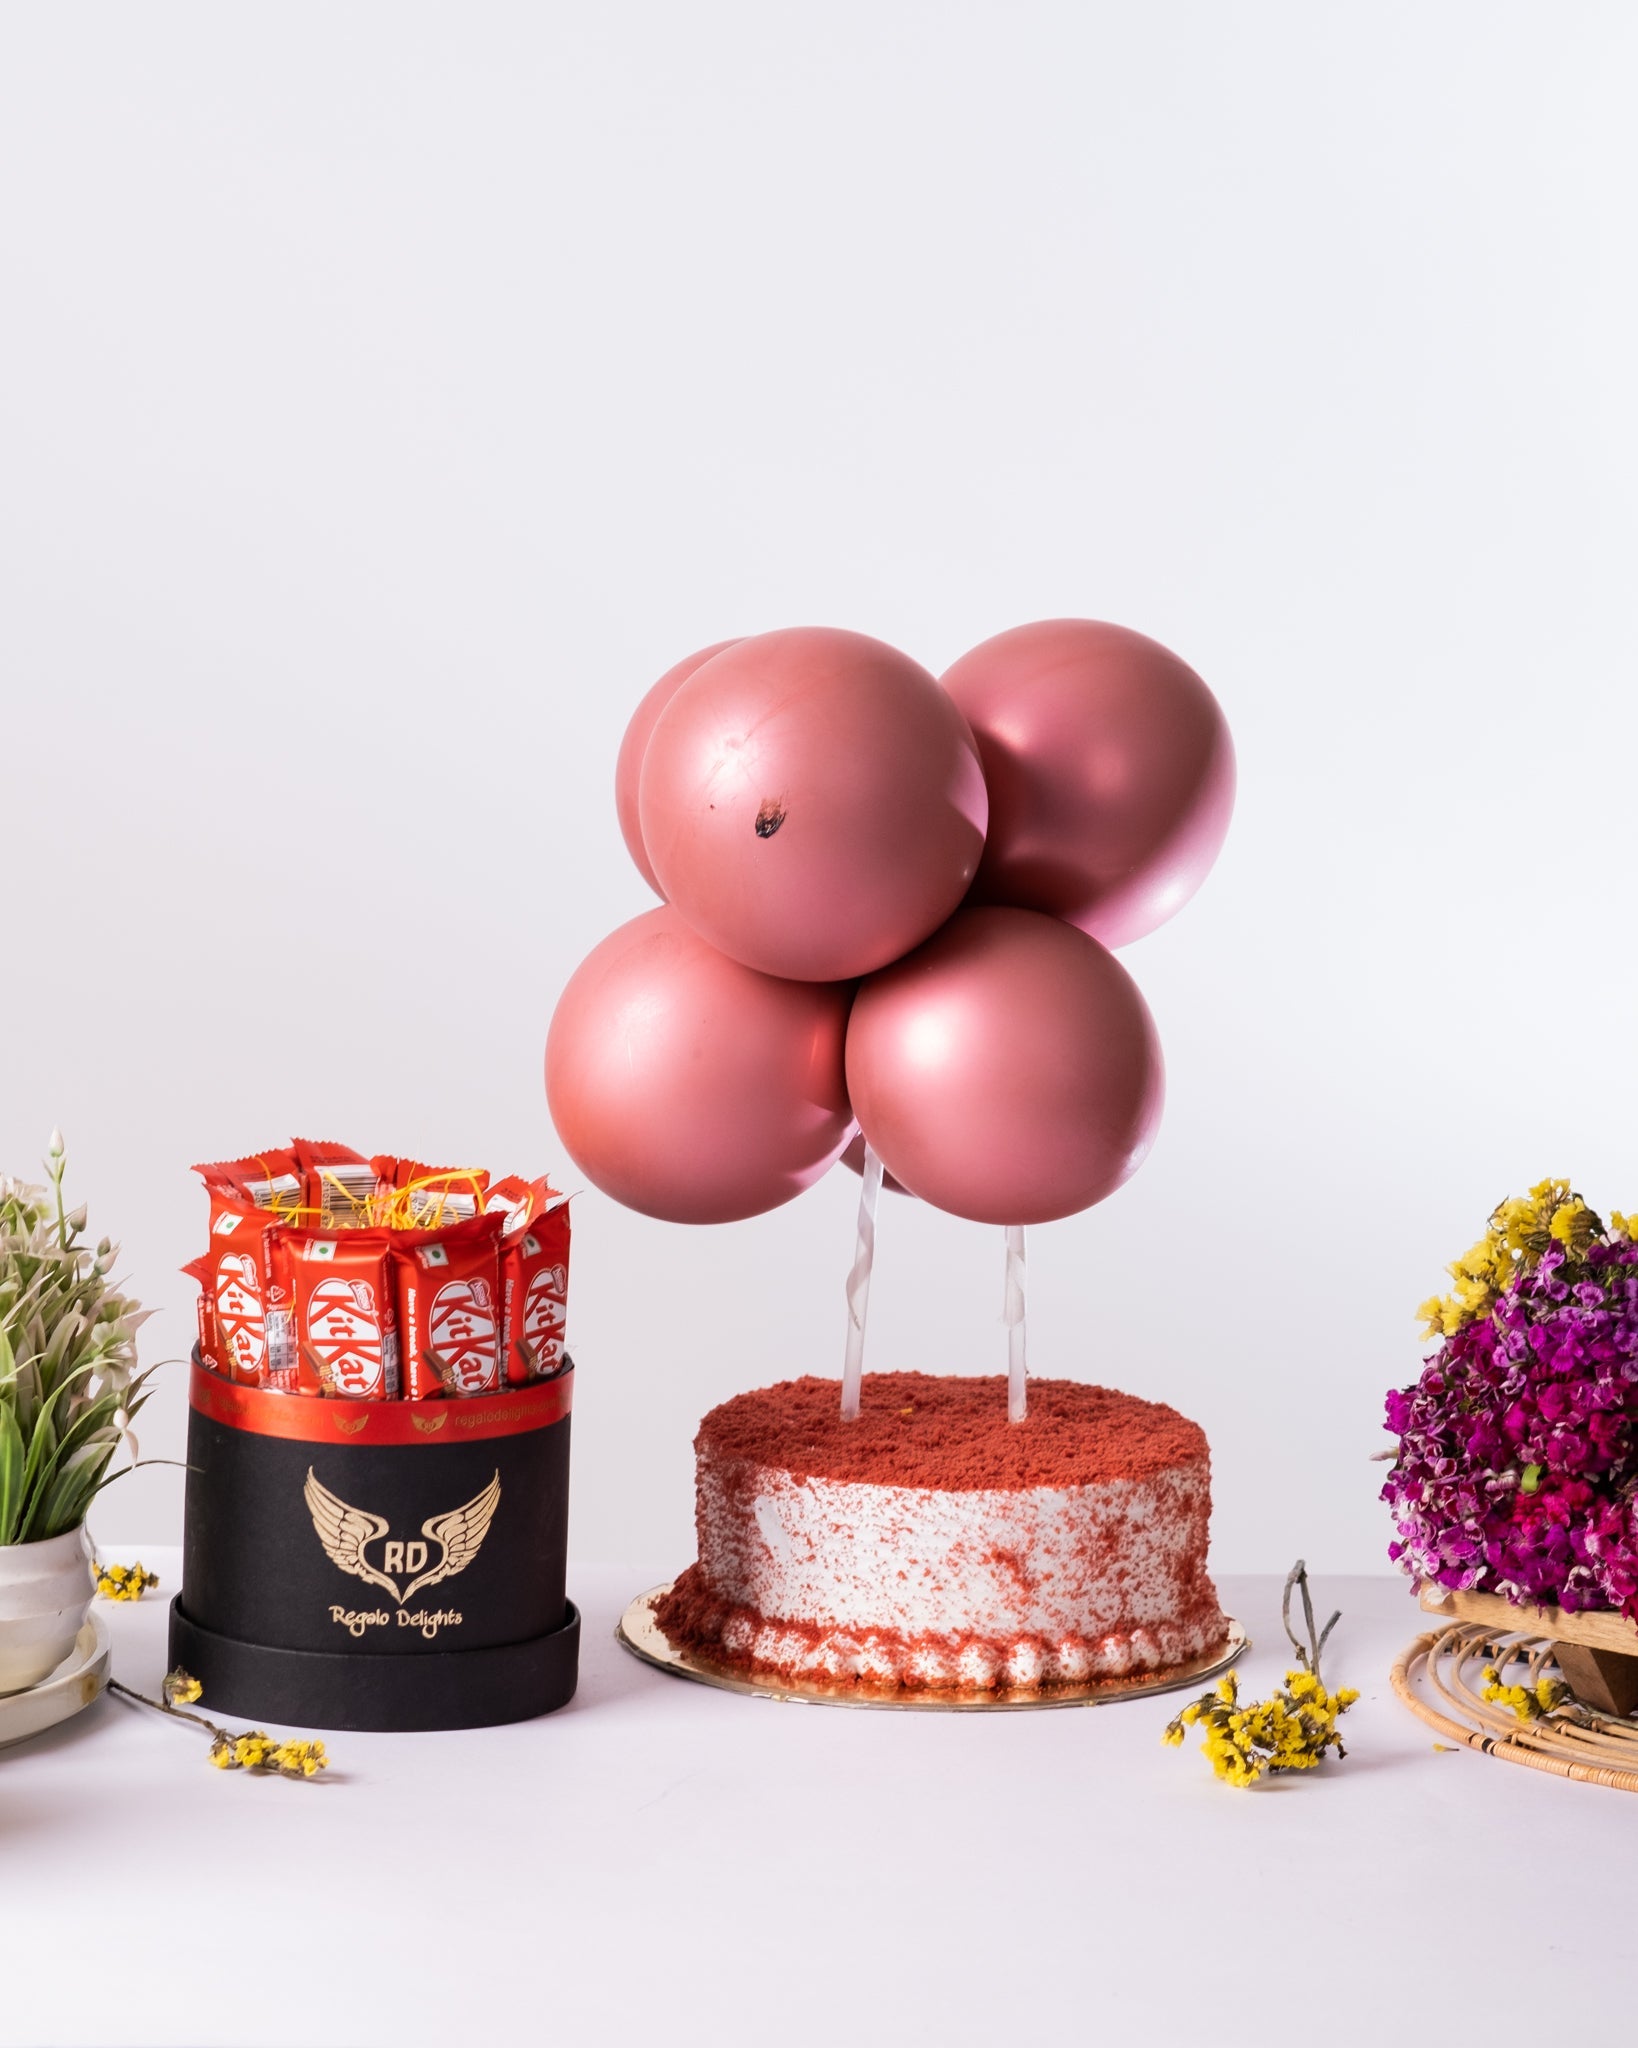 Red Velvet Fondle Cake & KitKat Regalo Delights